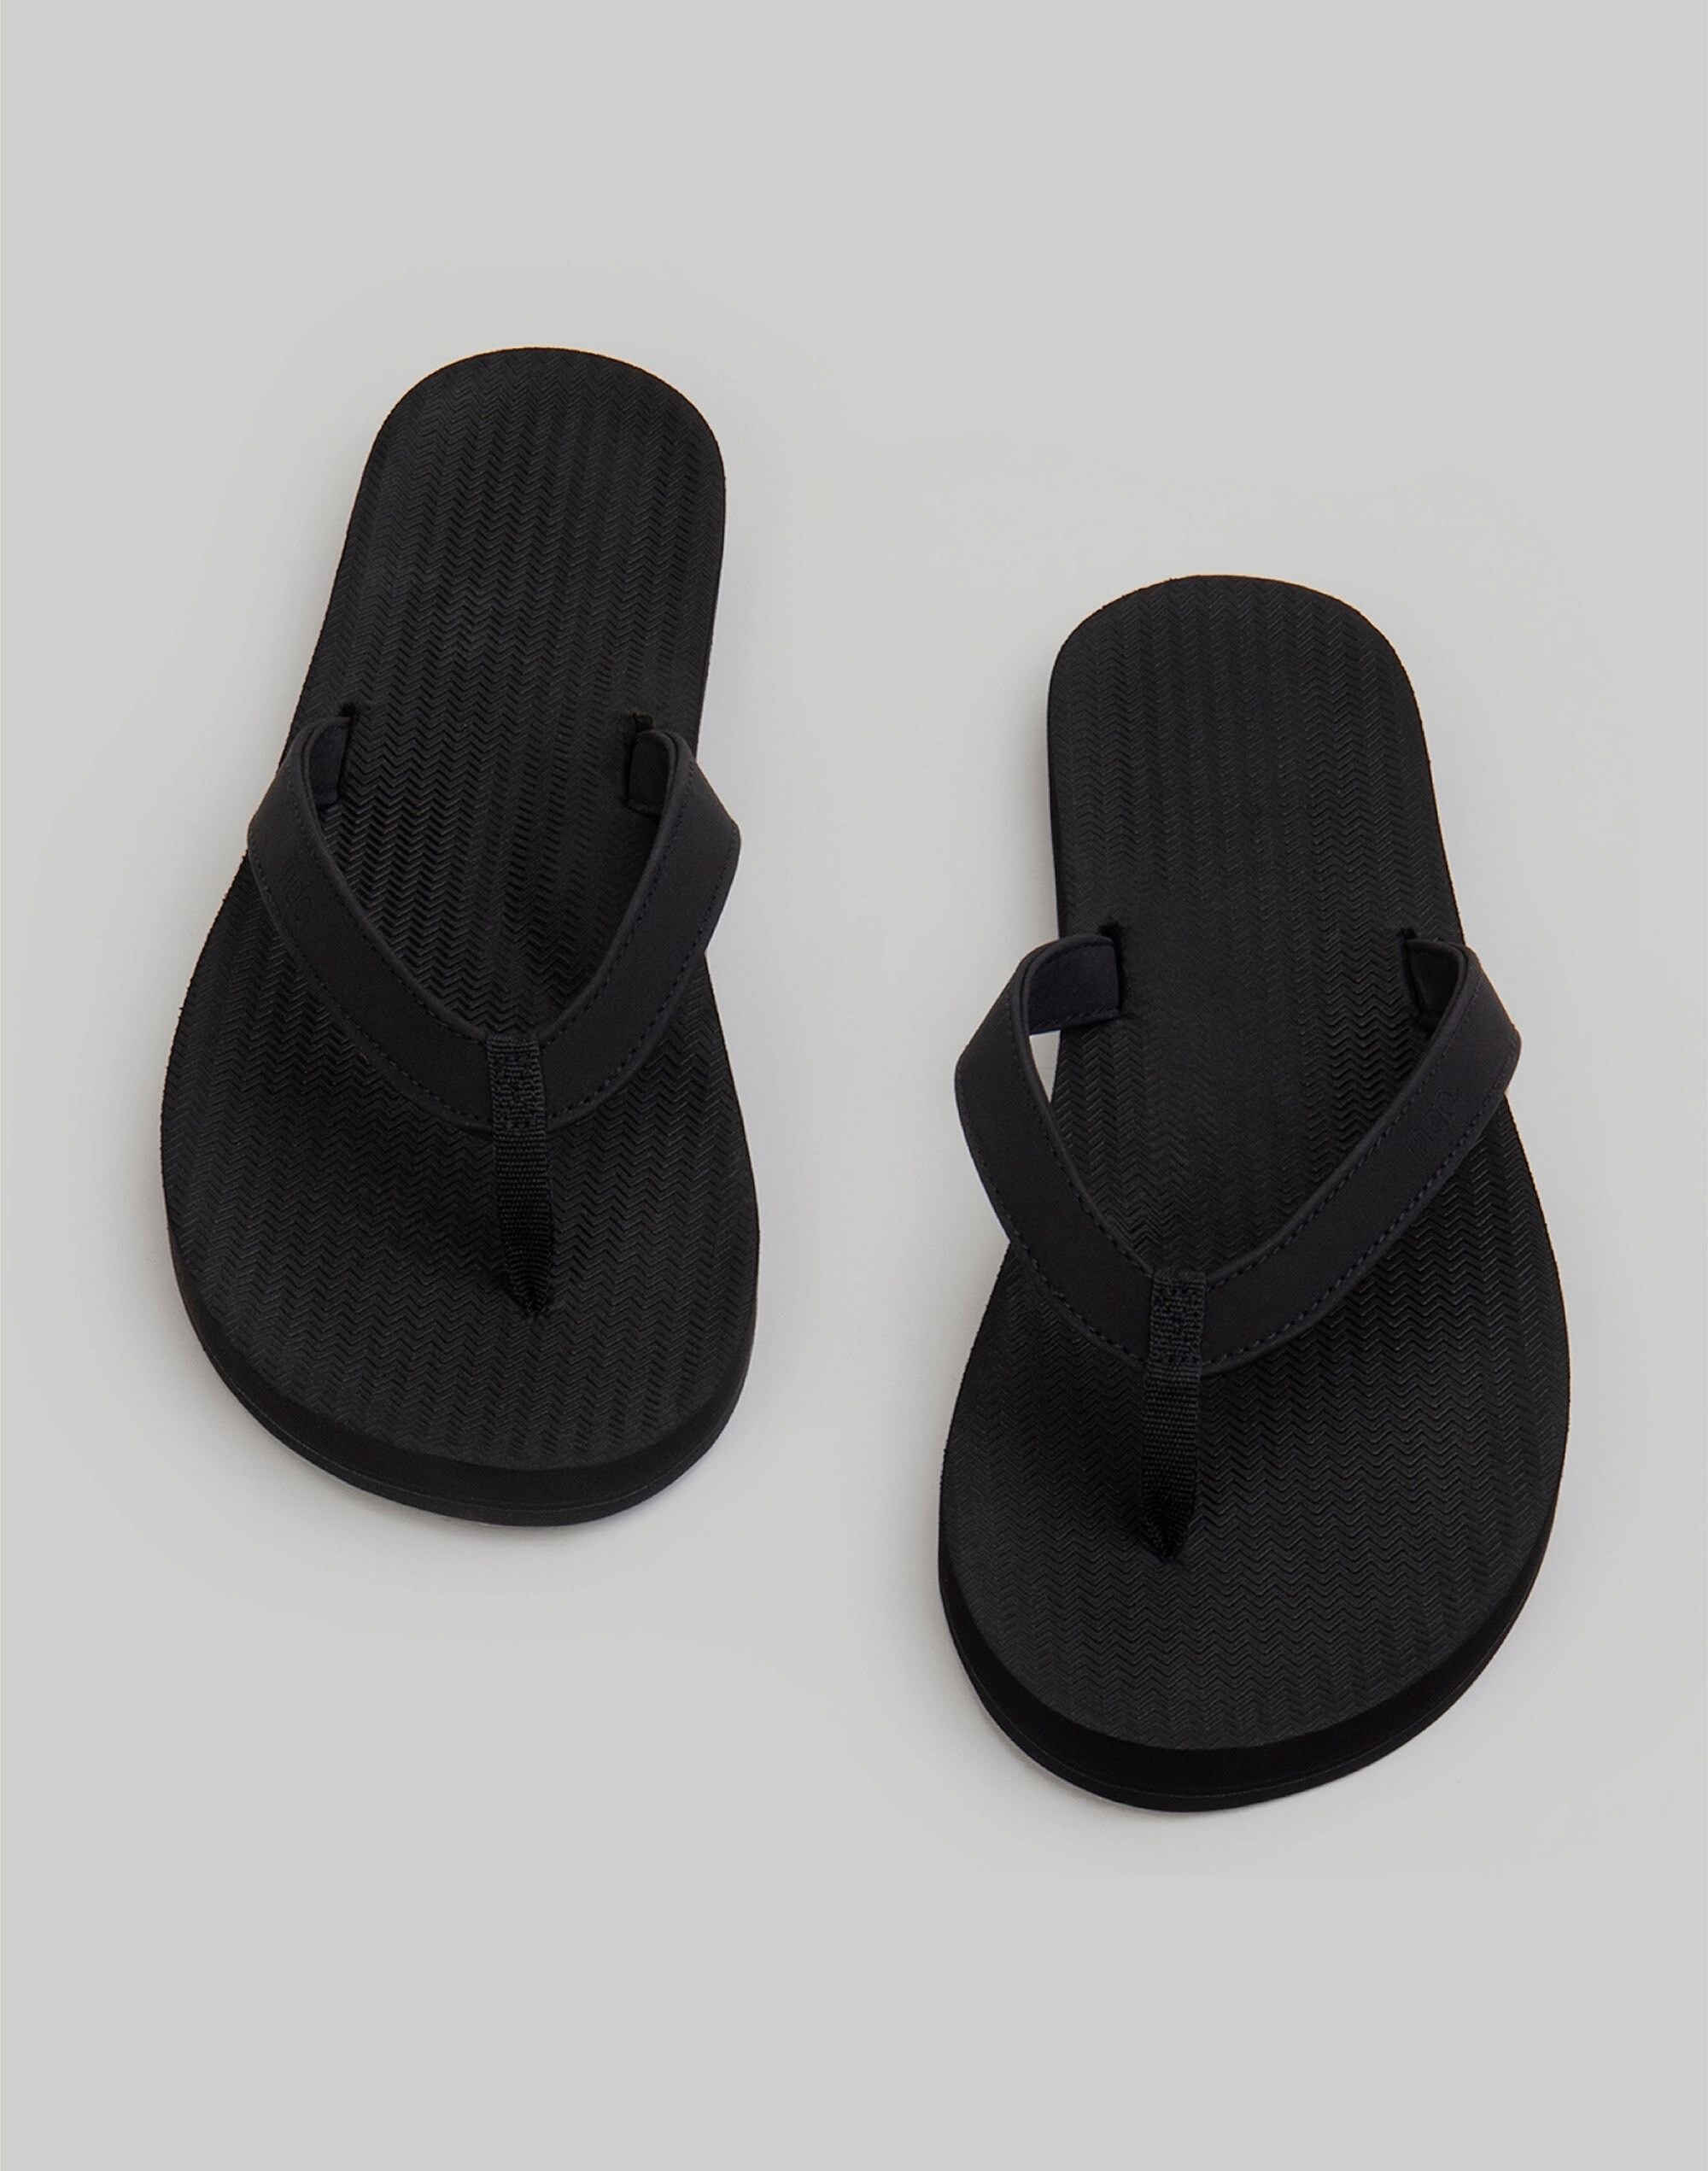 Indosole Flip Flop Sandals